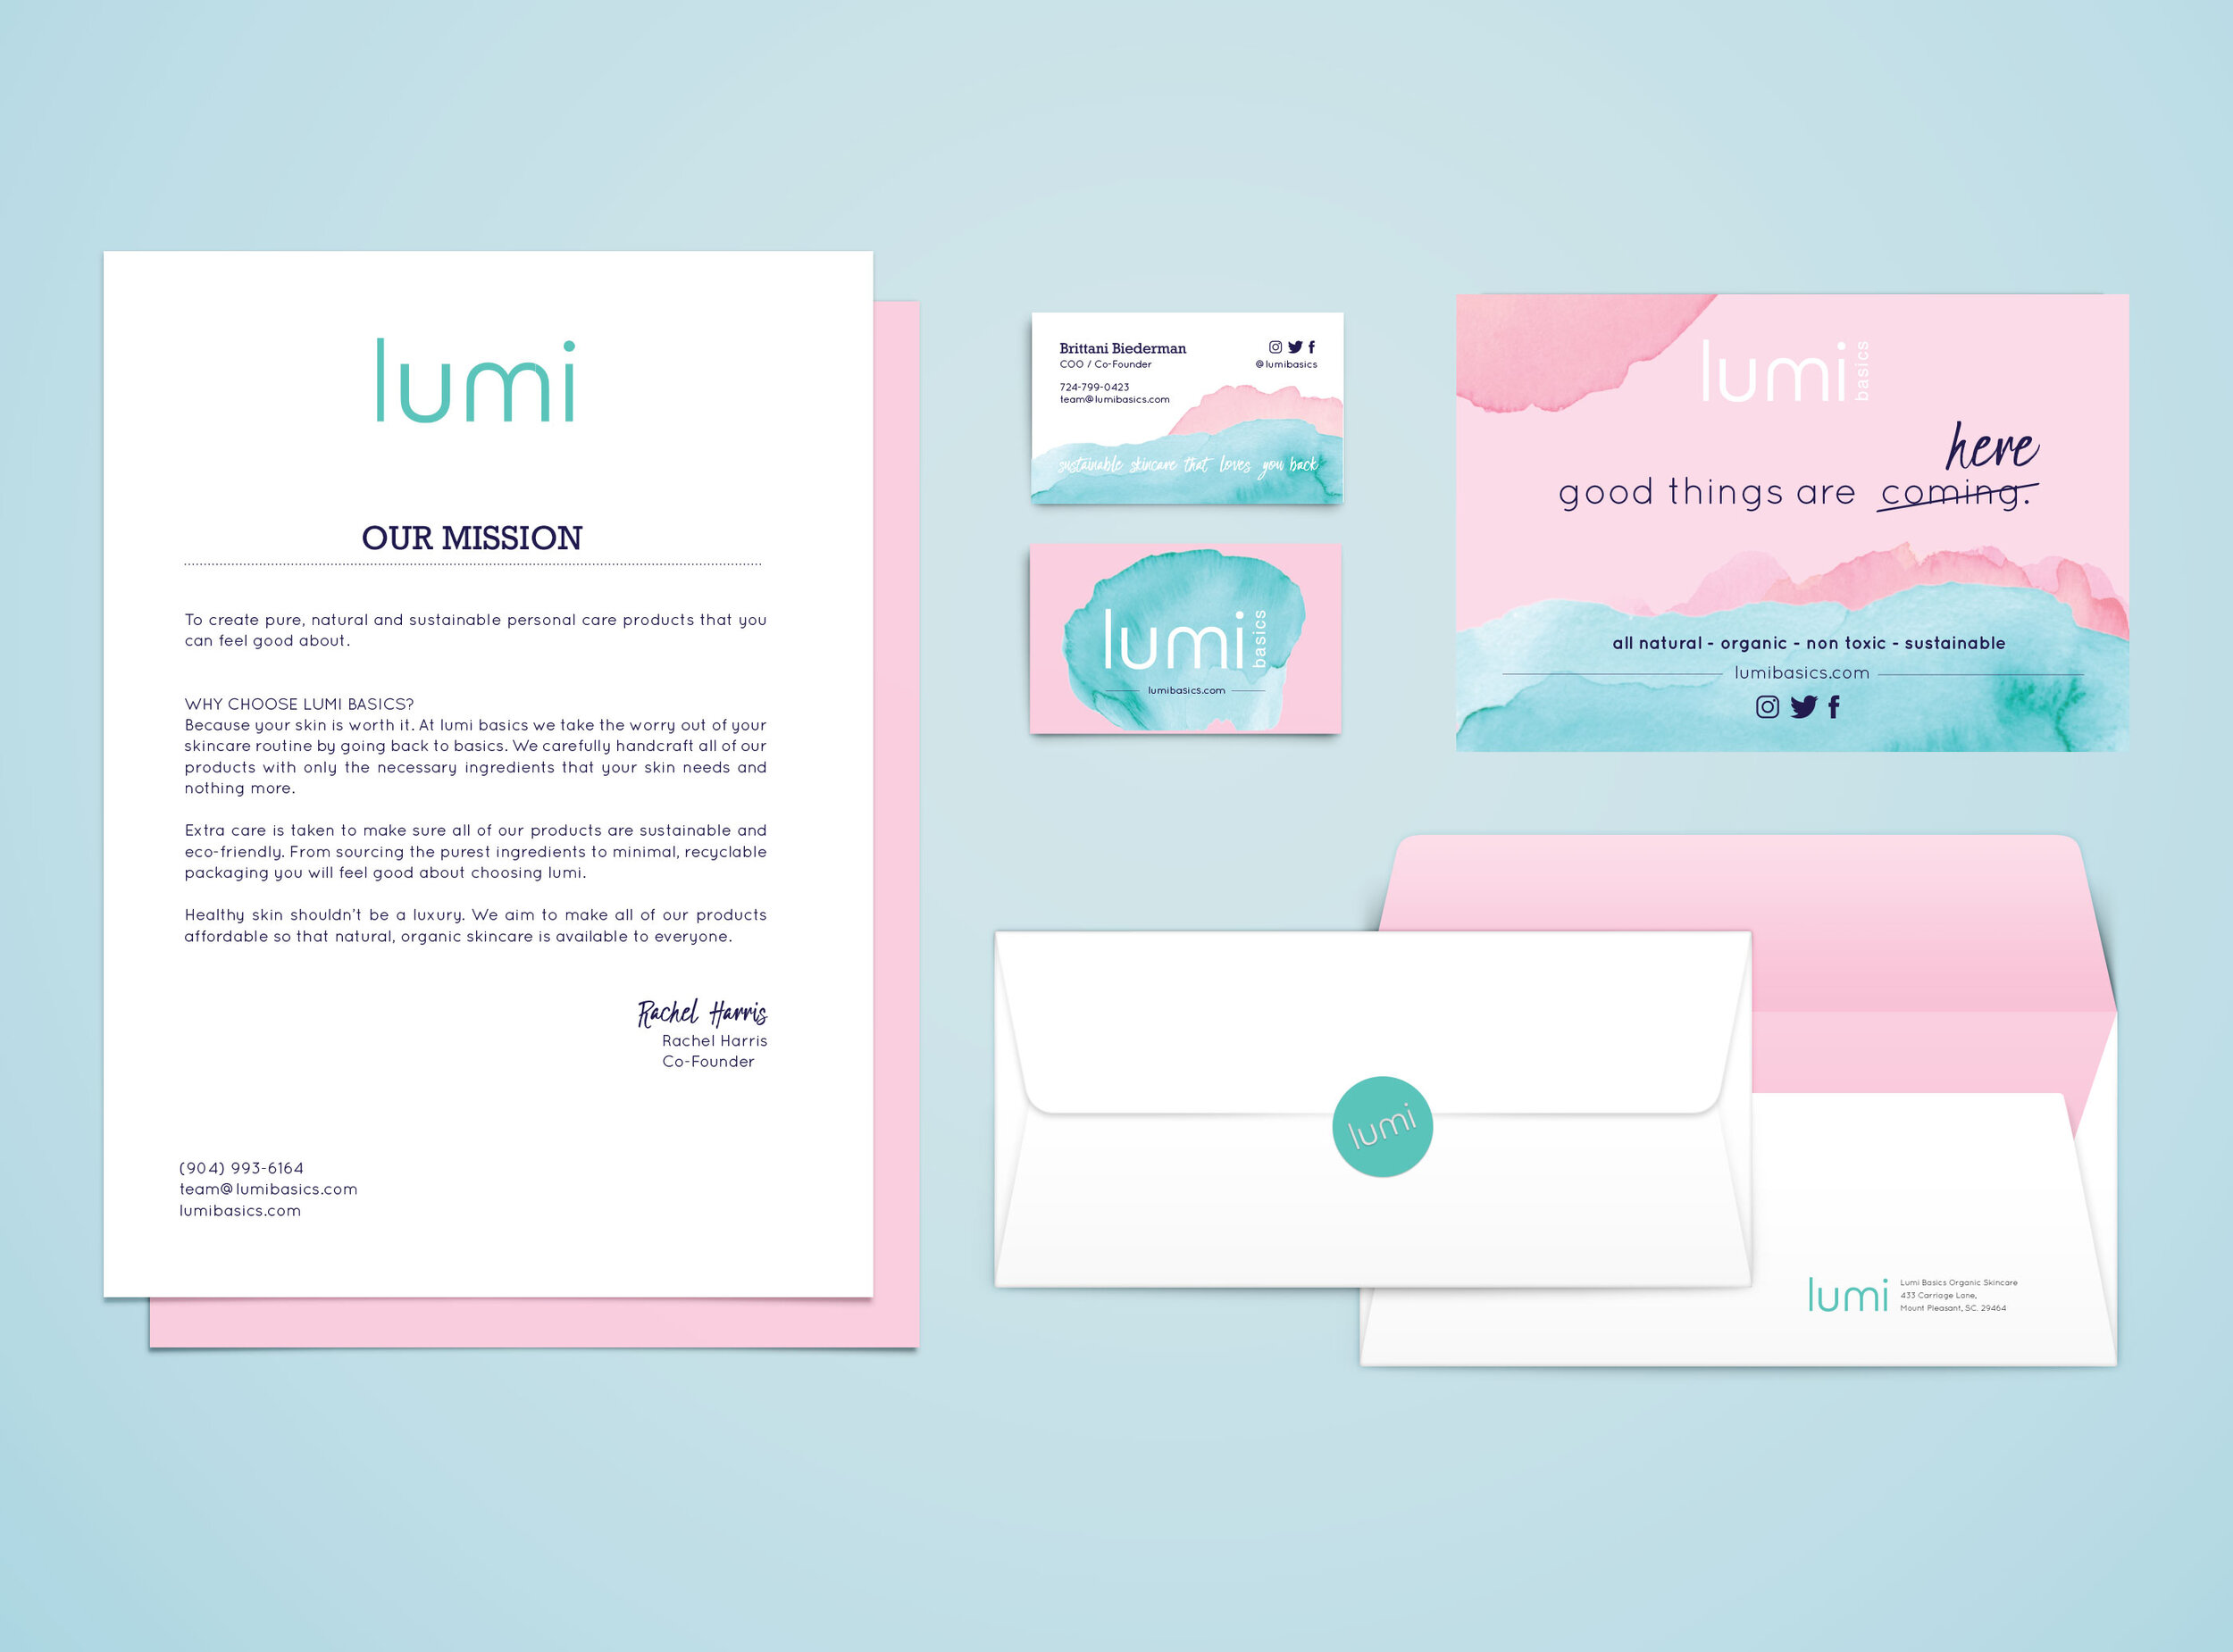 lumi basics natural skincare products